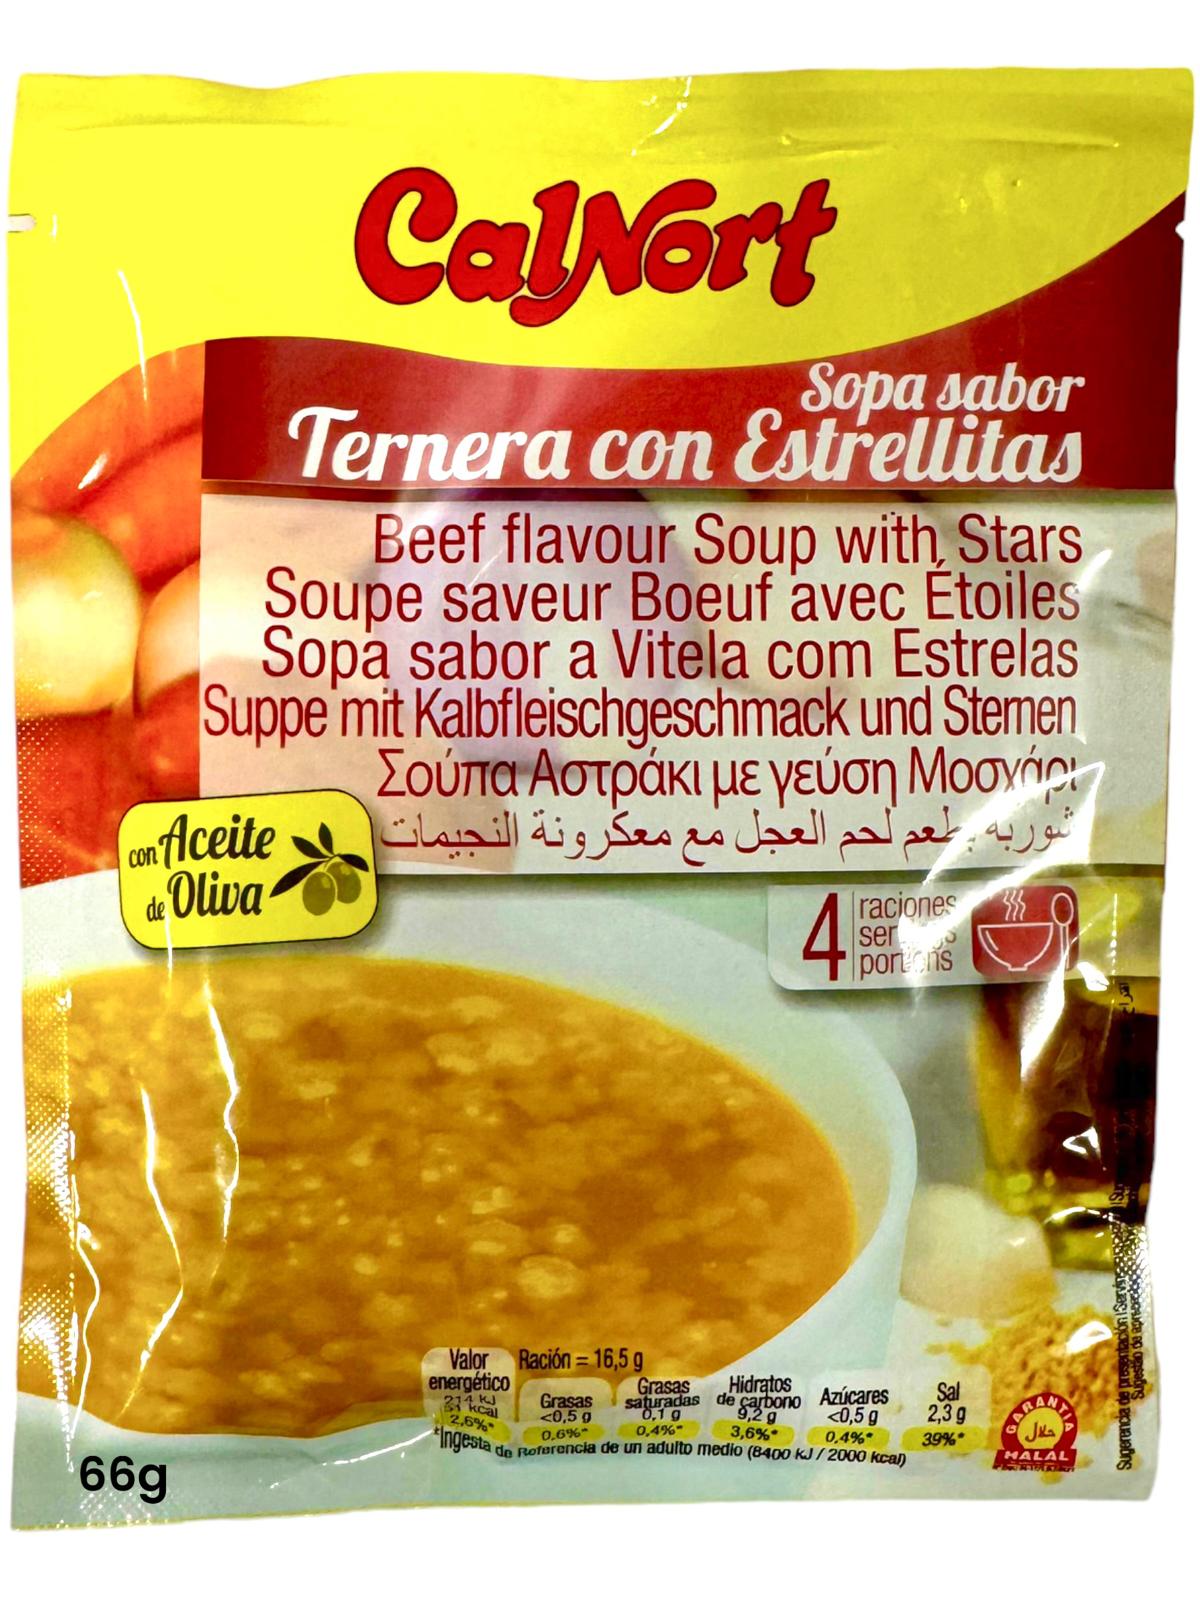 Calnort Ternera con Estrellitas Star Soup 66g